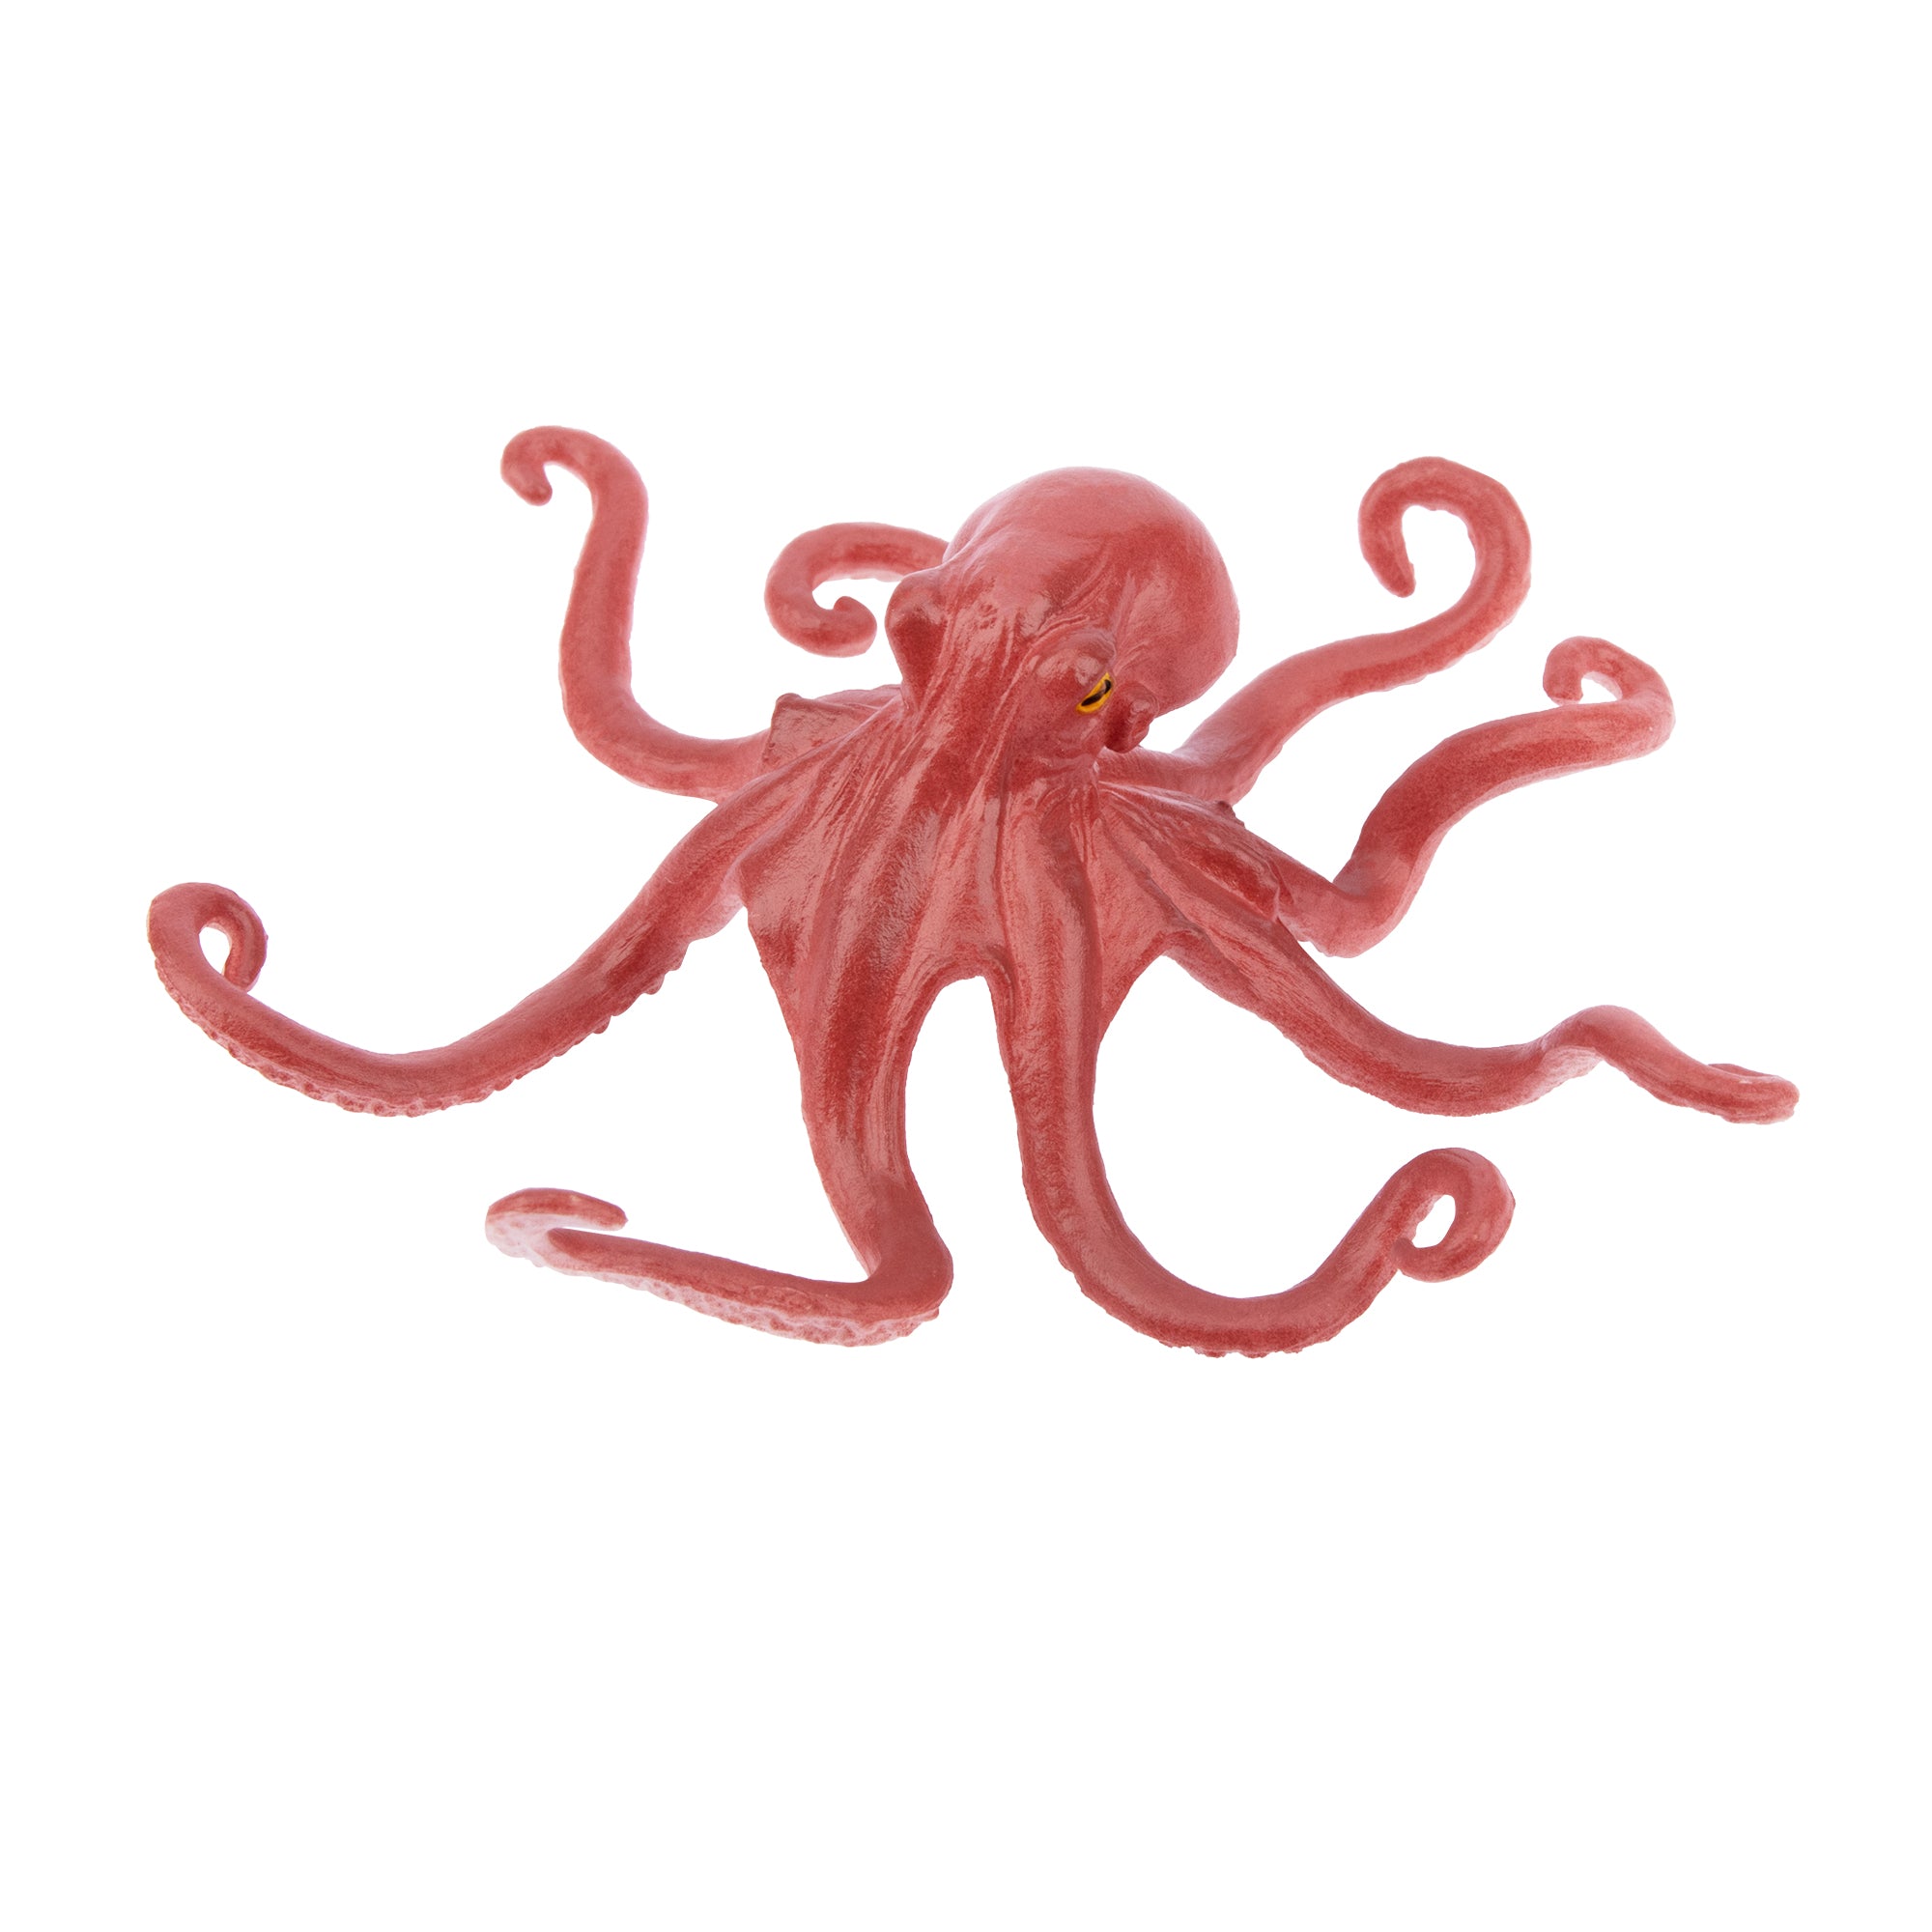 Toymany Octopus Figurine Toy